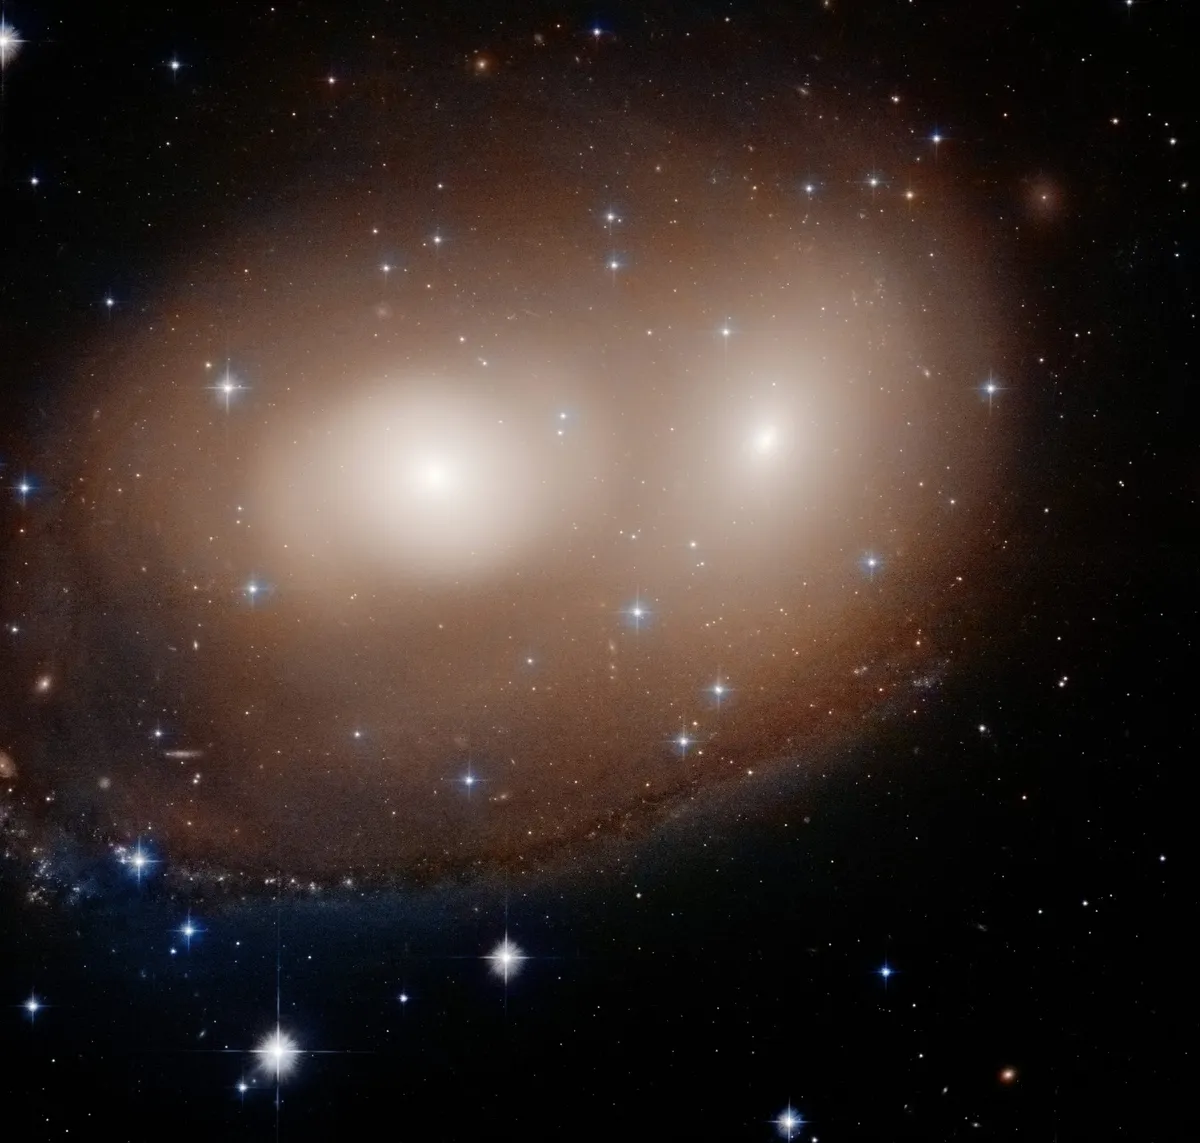 A galactic collision looking rather like a Halloween pumpkin. Credit: NASA, ESA, and W. Keel (University of Alabama)